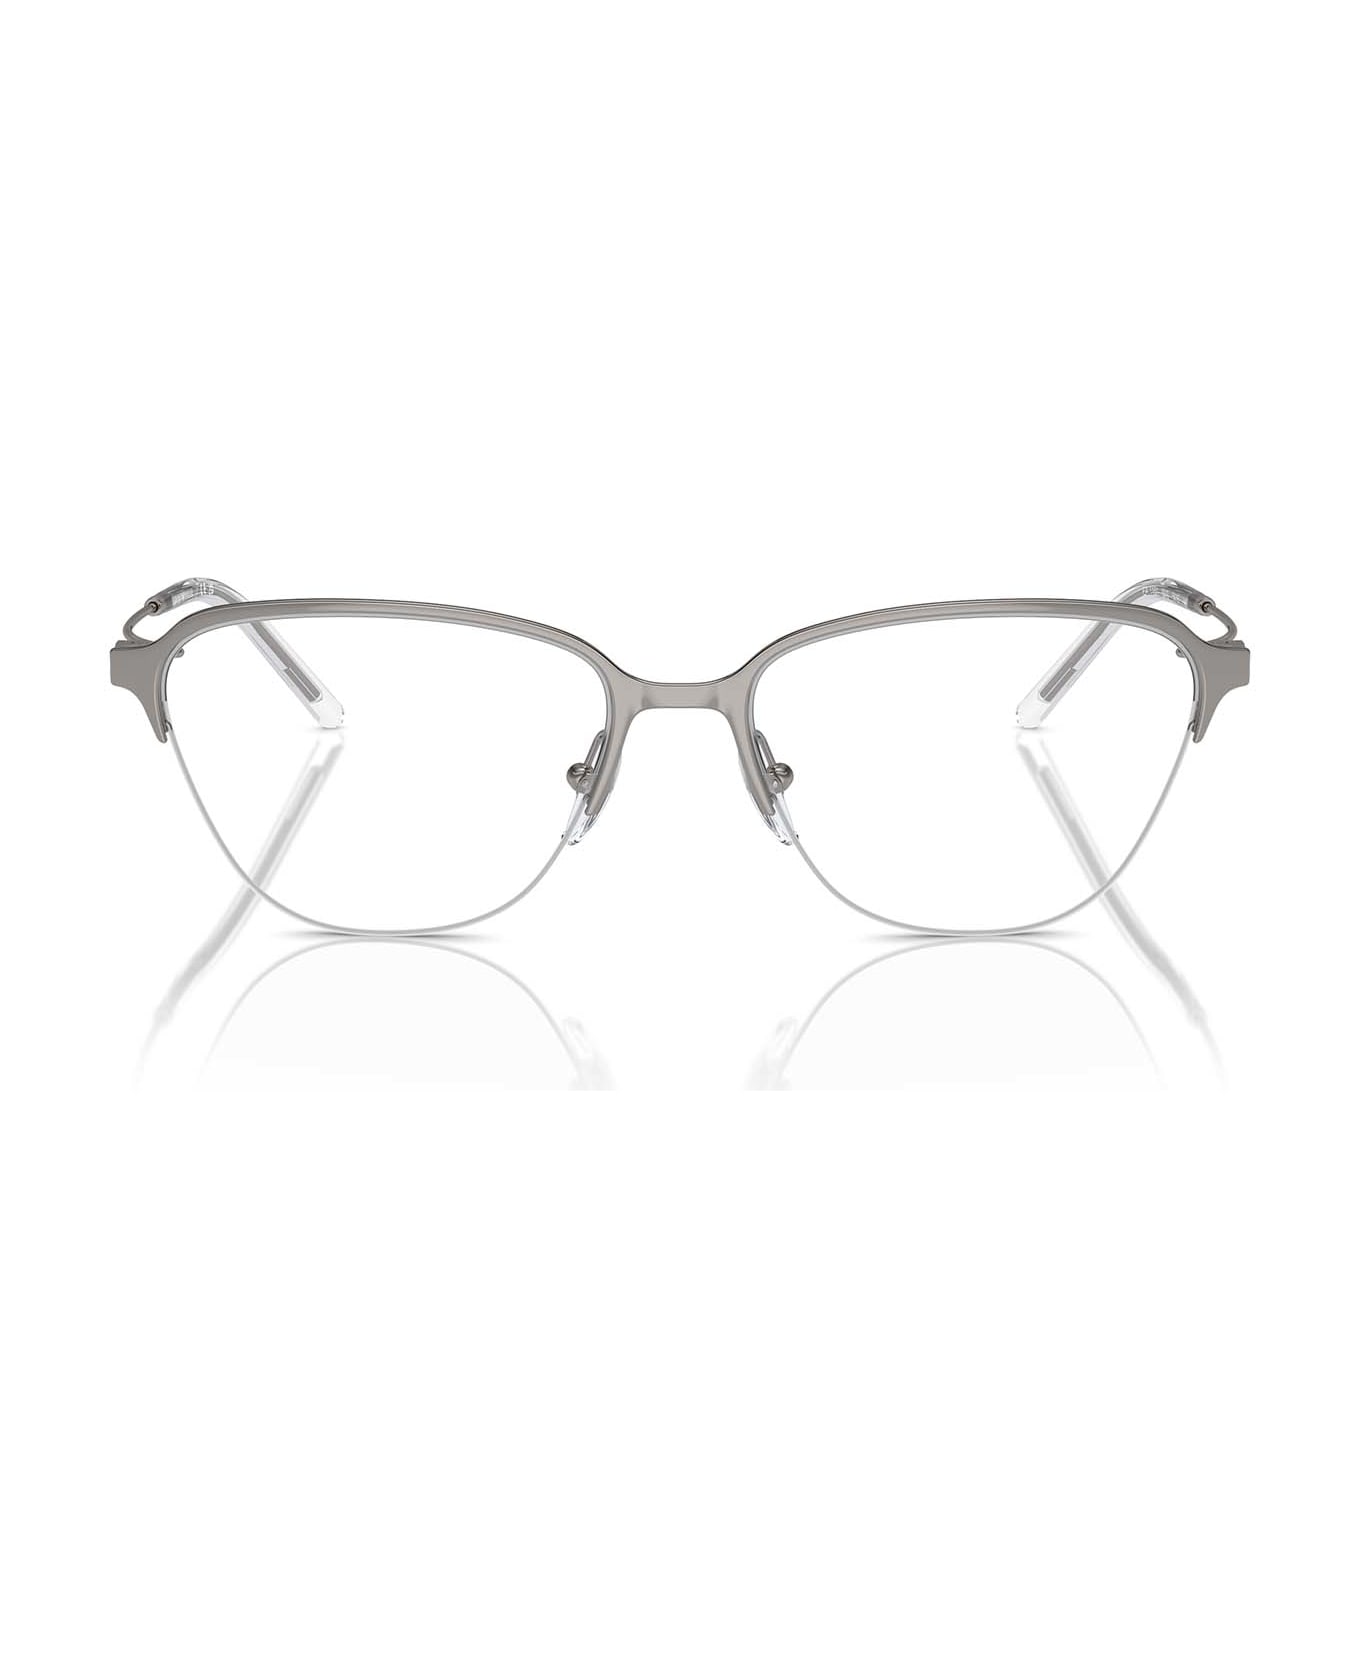 Emporio Armani Ea1161 Shiny Gunmetal Glasses - Shiny Gunmetal